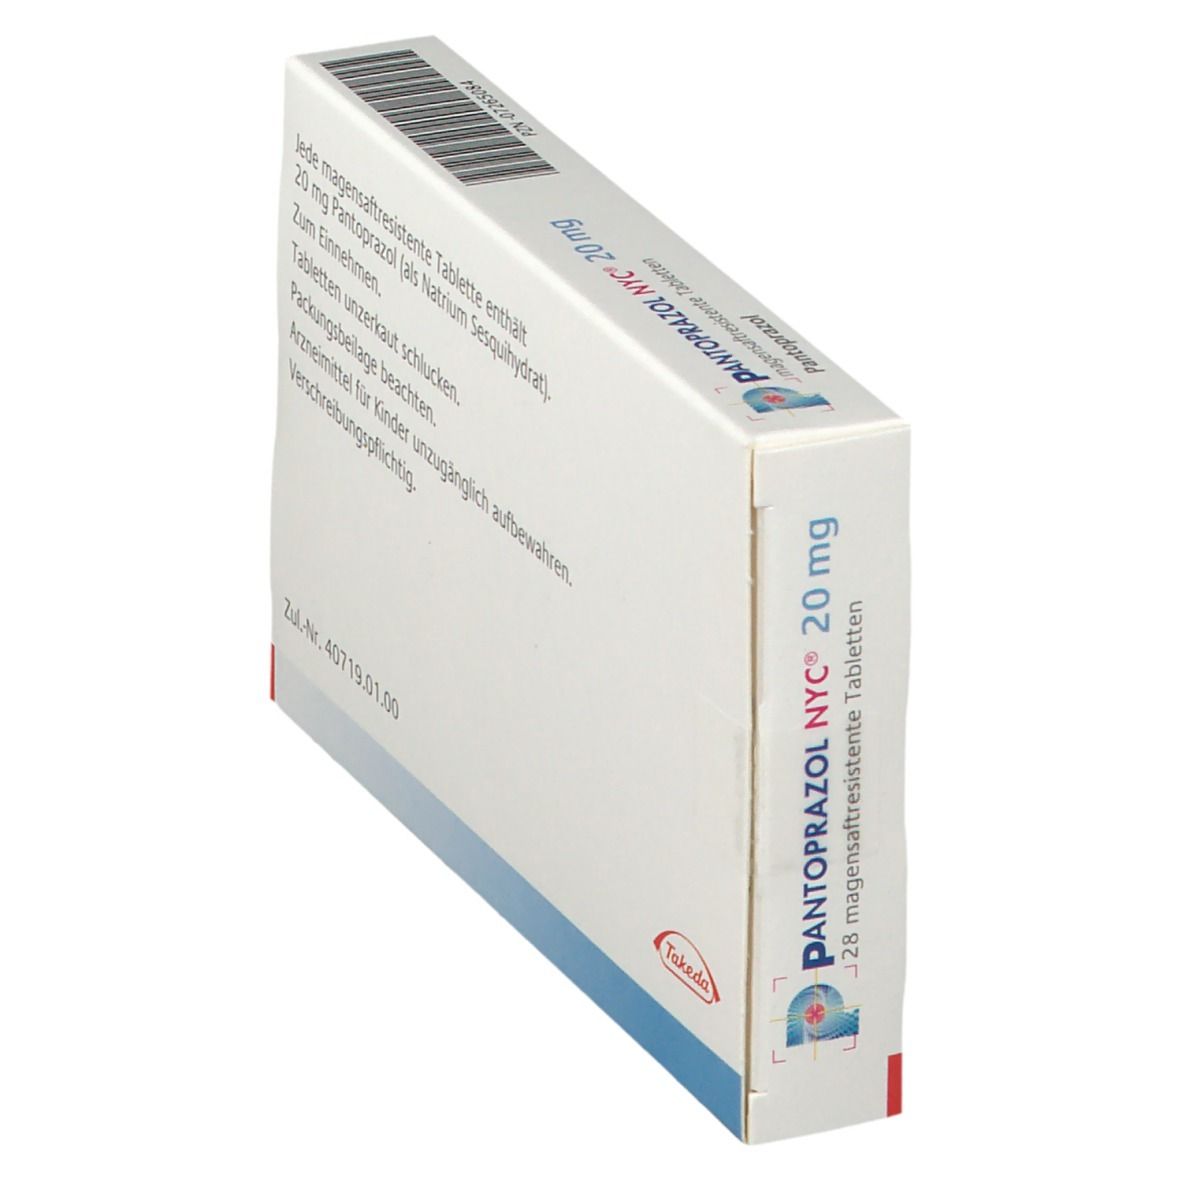 Pantoprazol NYC® 20 mg